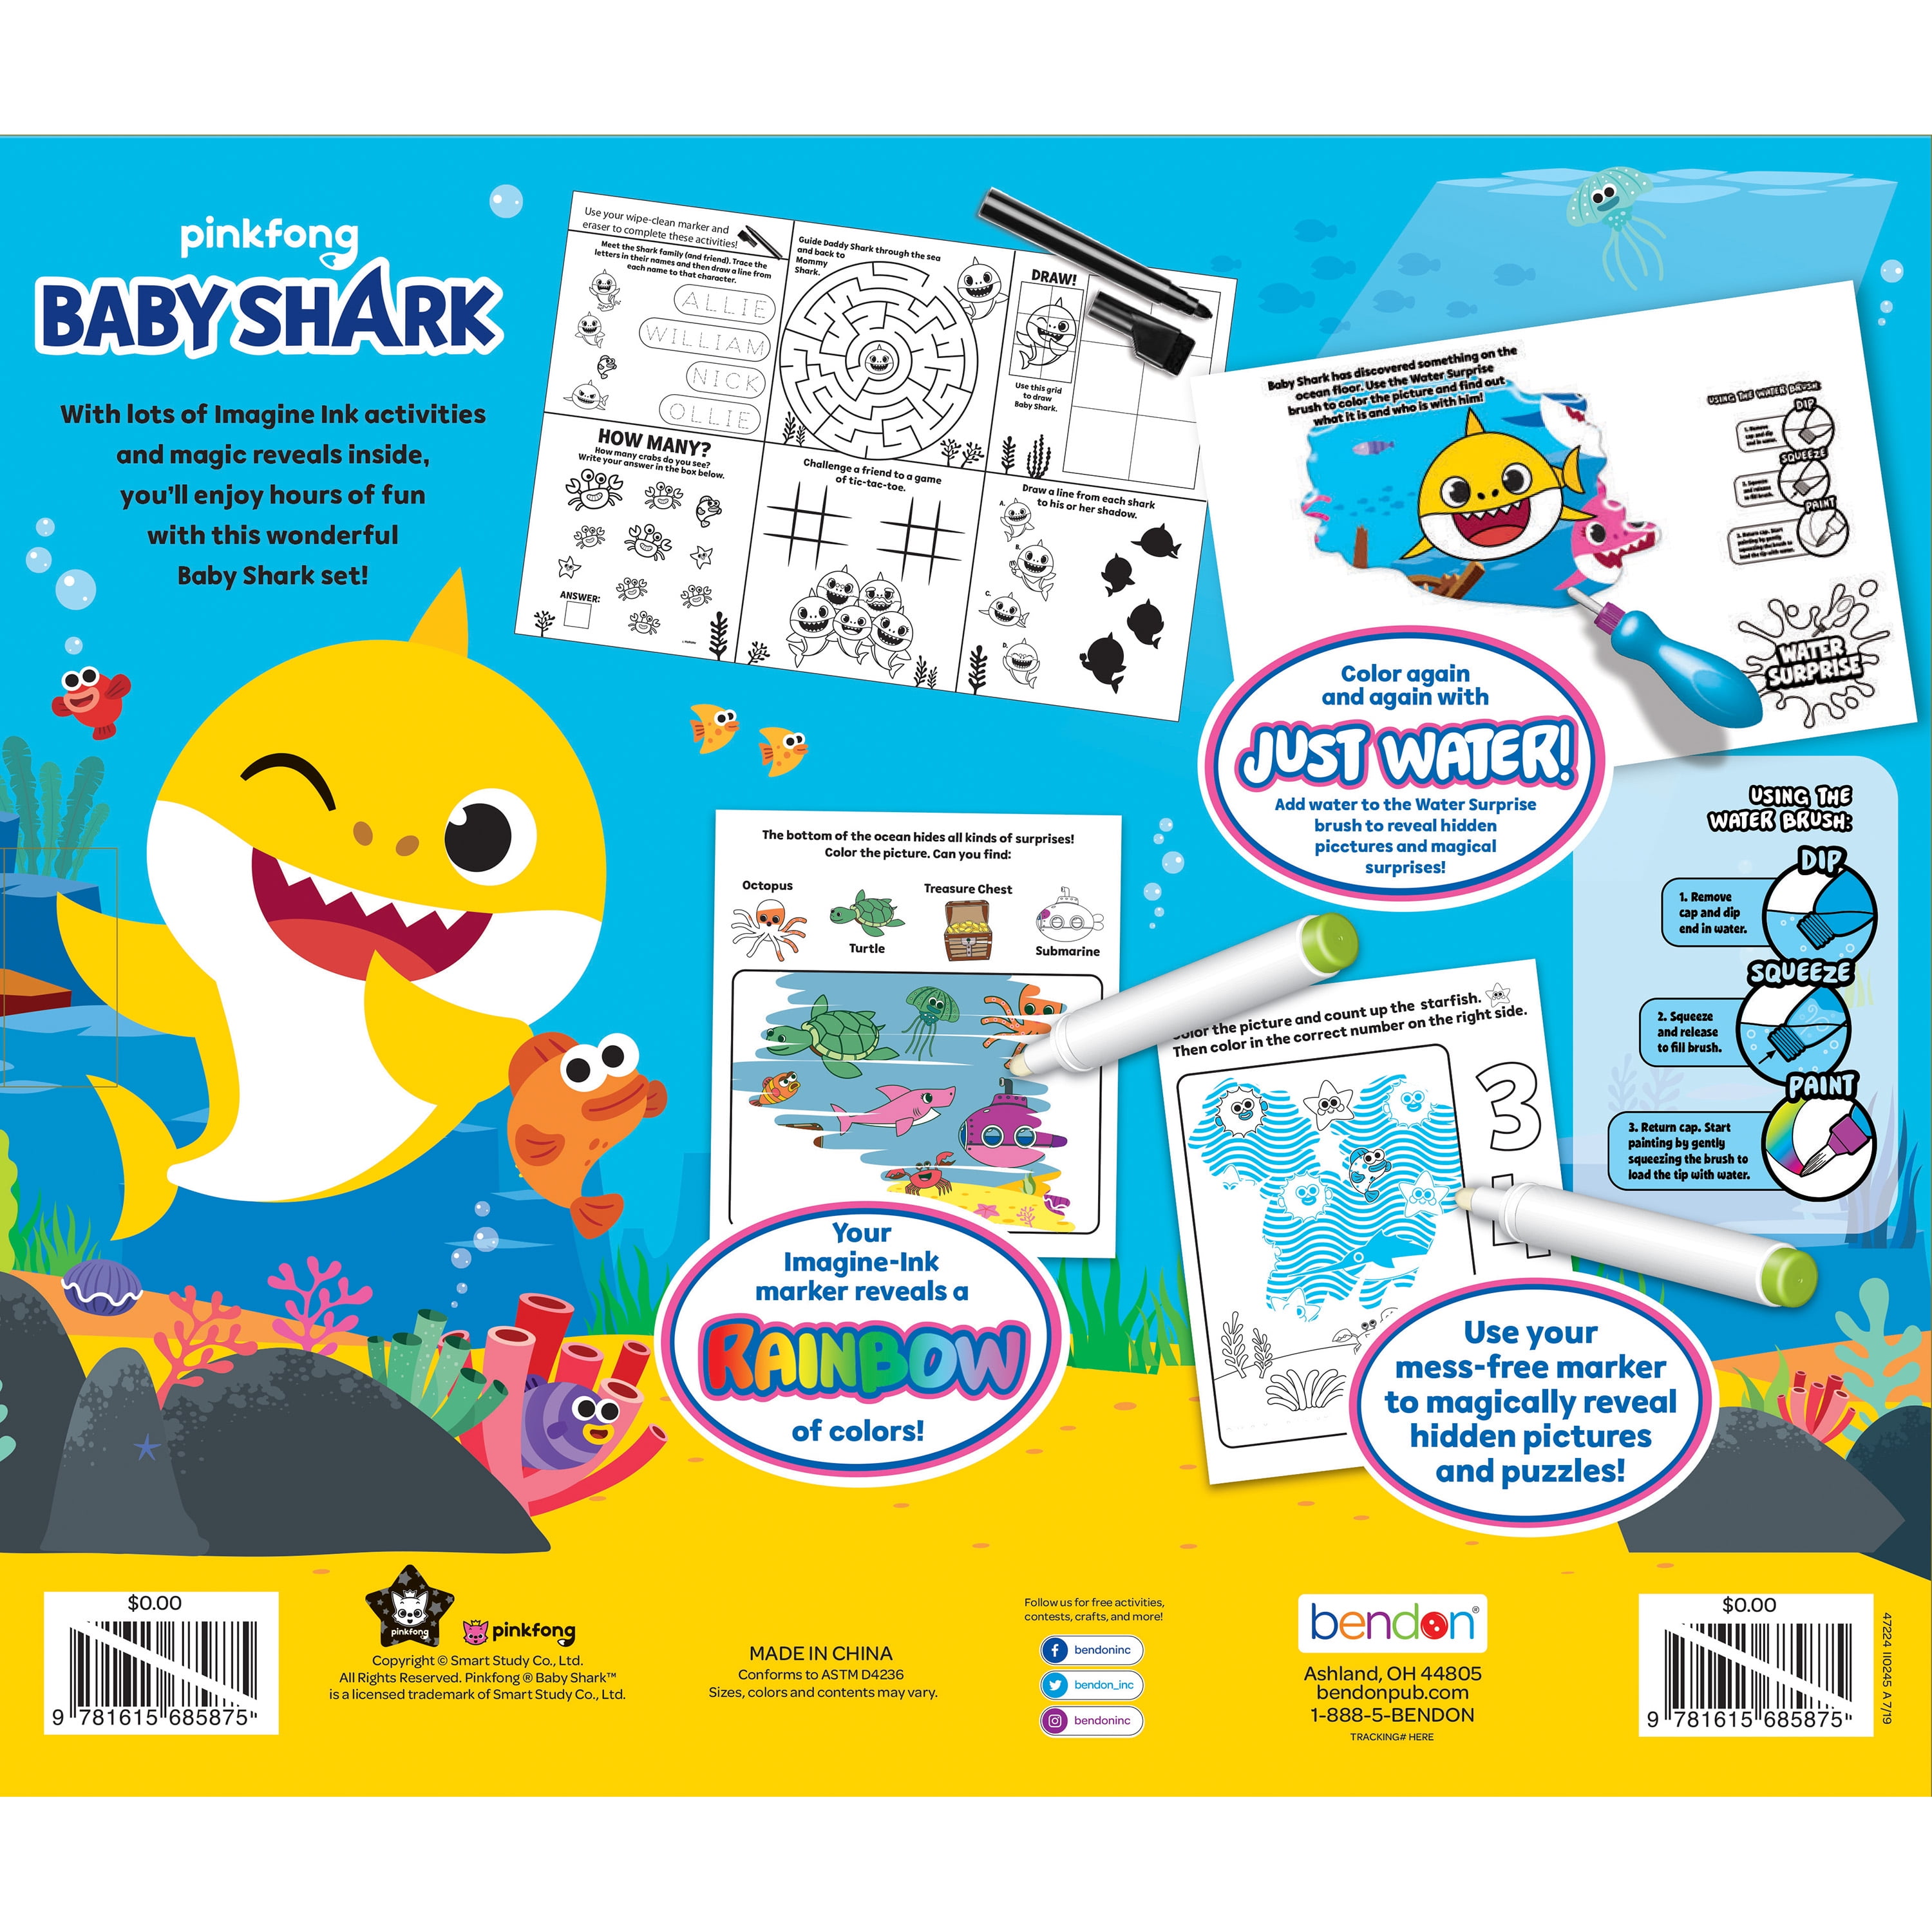 BABY SHARK imagine ink MESS-FREE MARKER! - Crane Book Fairs